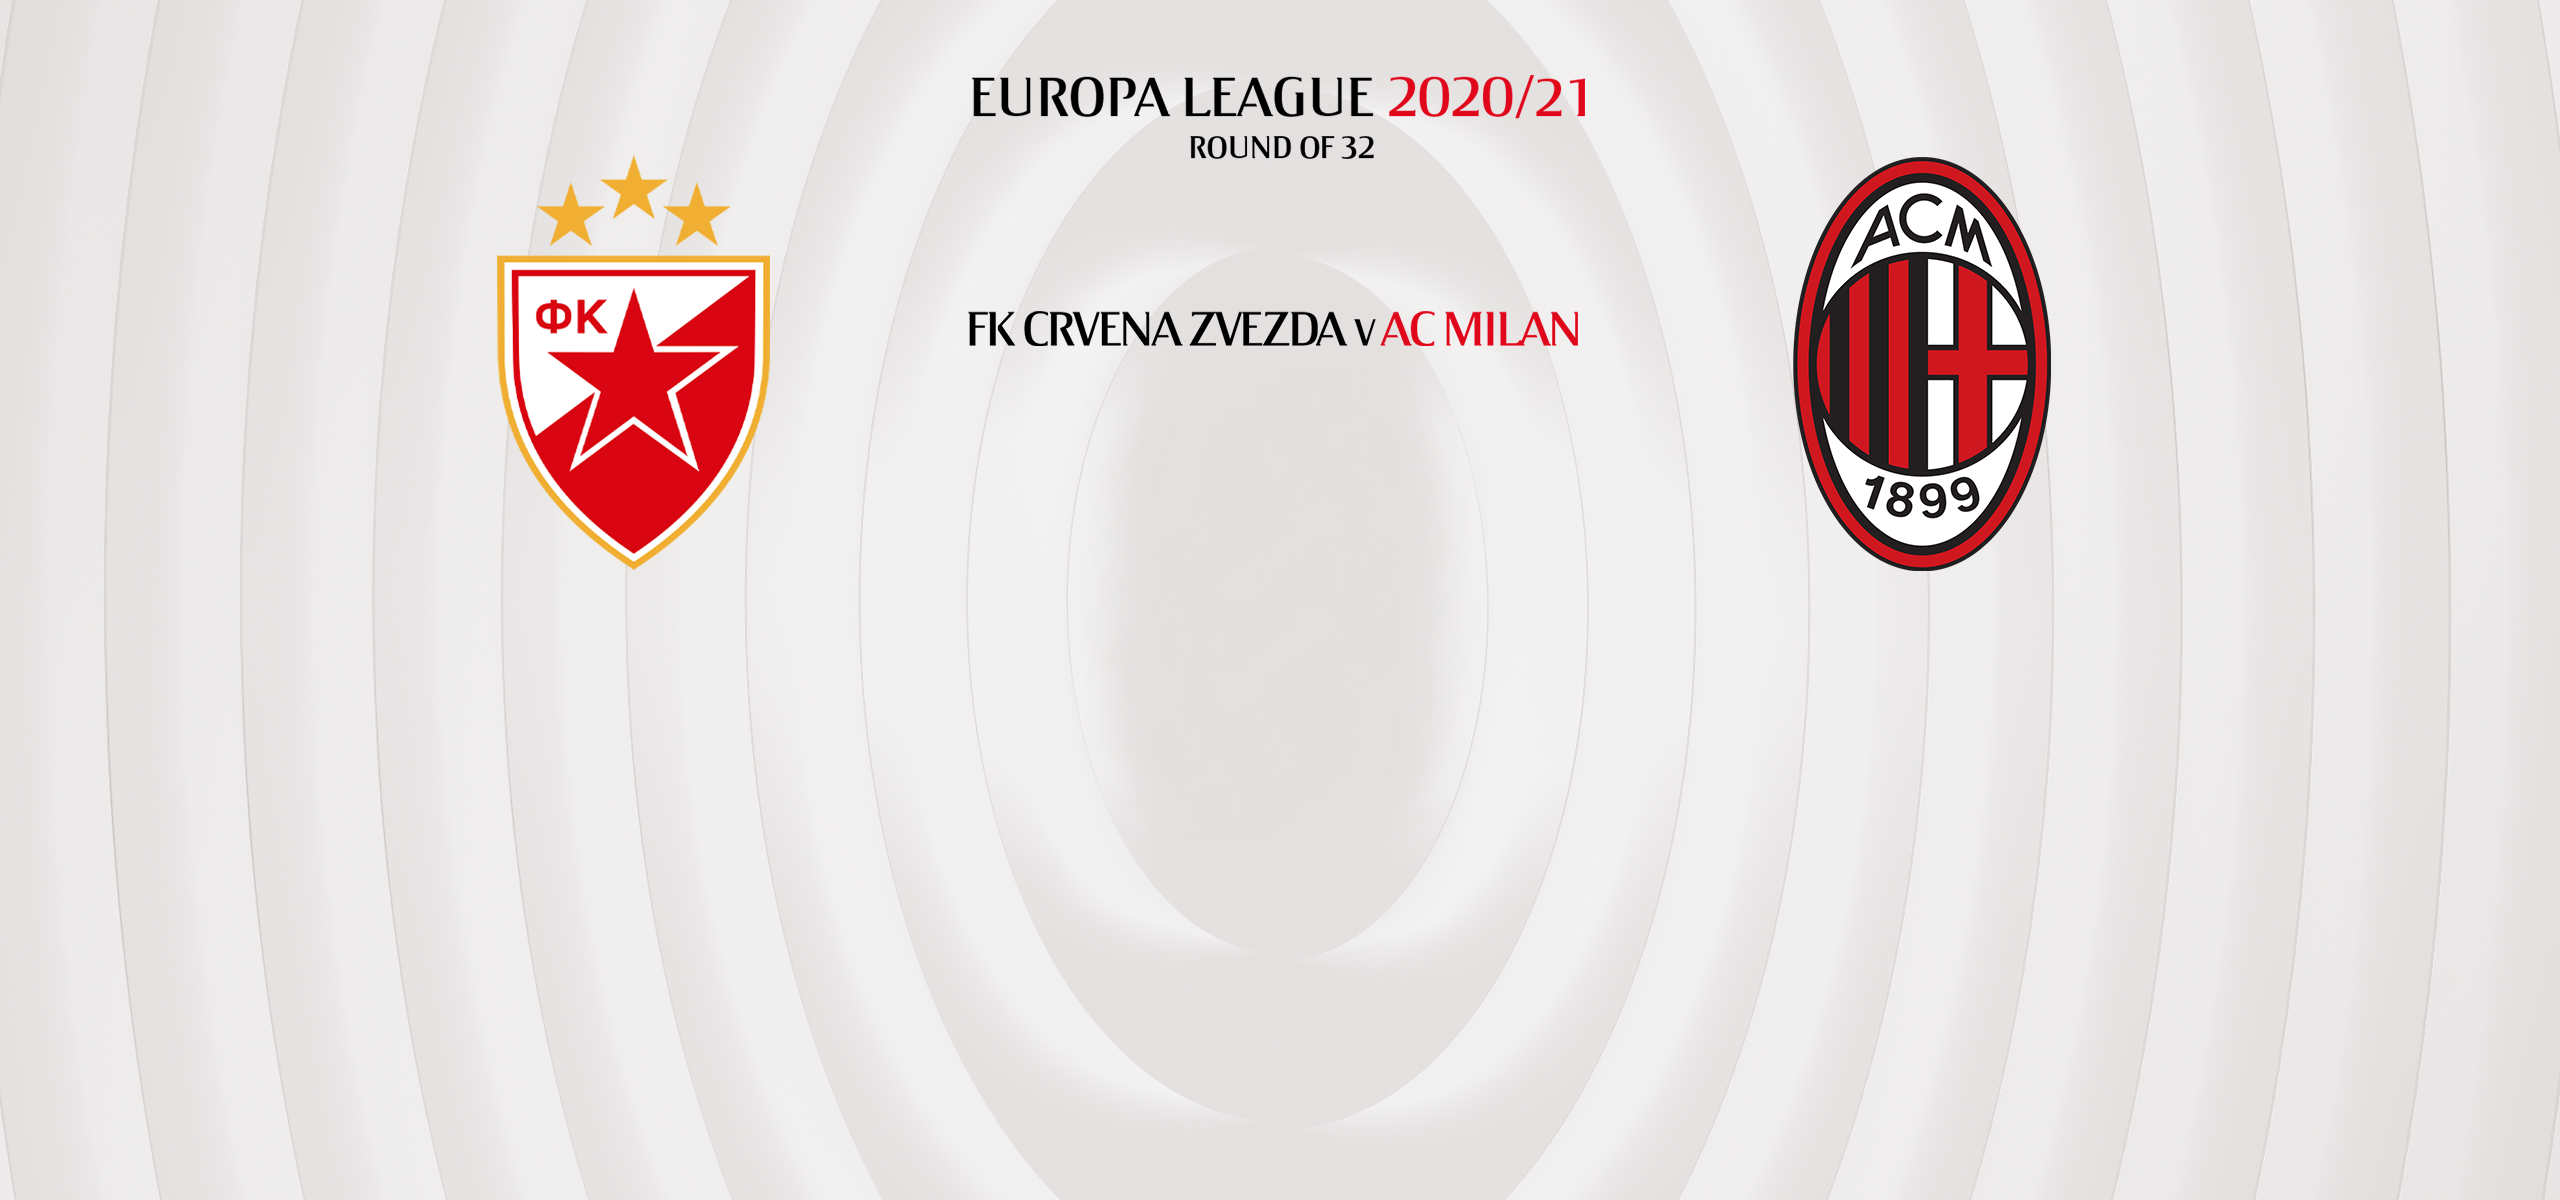 Europa League Ac Milan Face Crvena Zvezda In The Round Of 32 Ac Milan